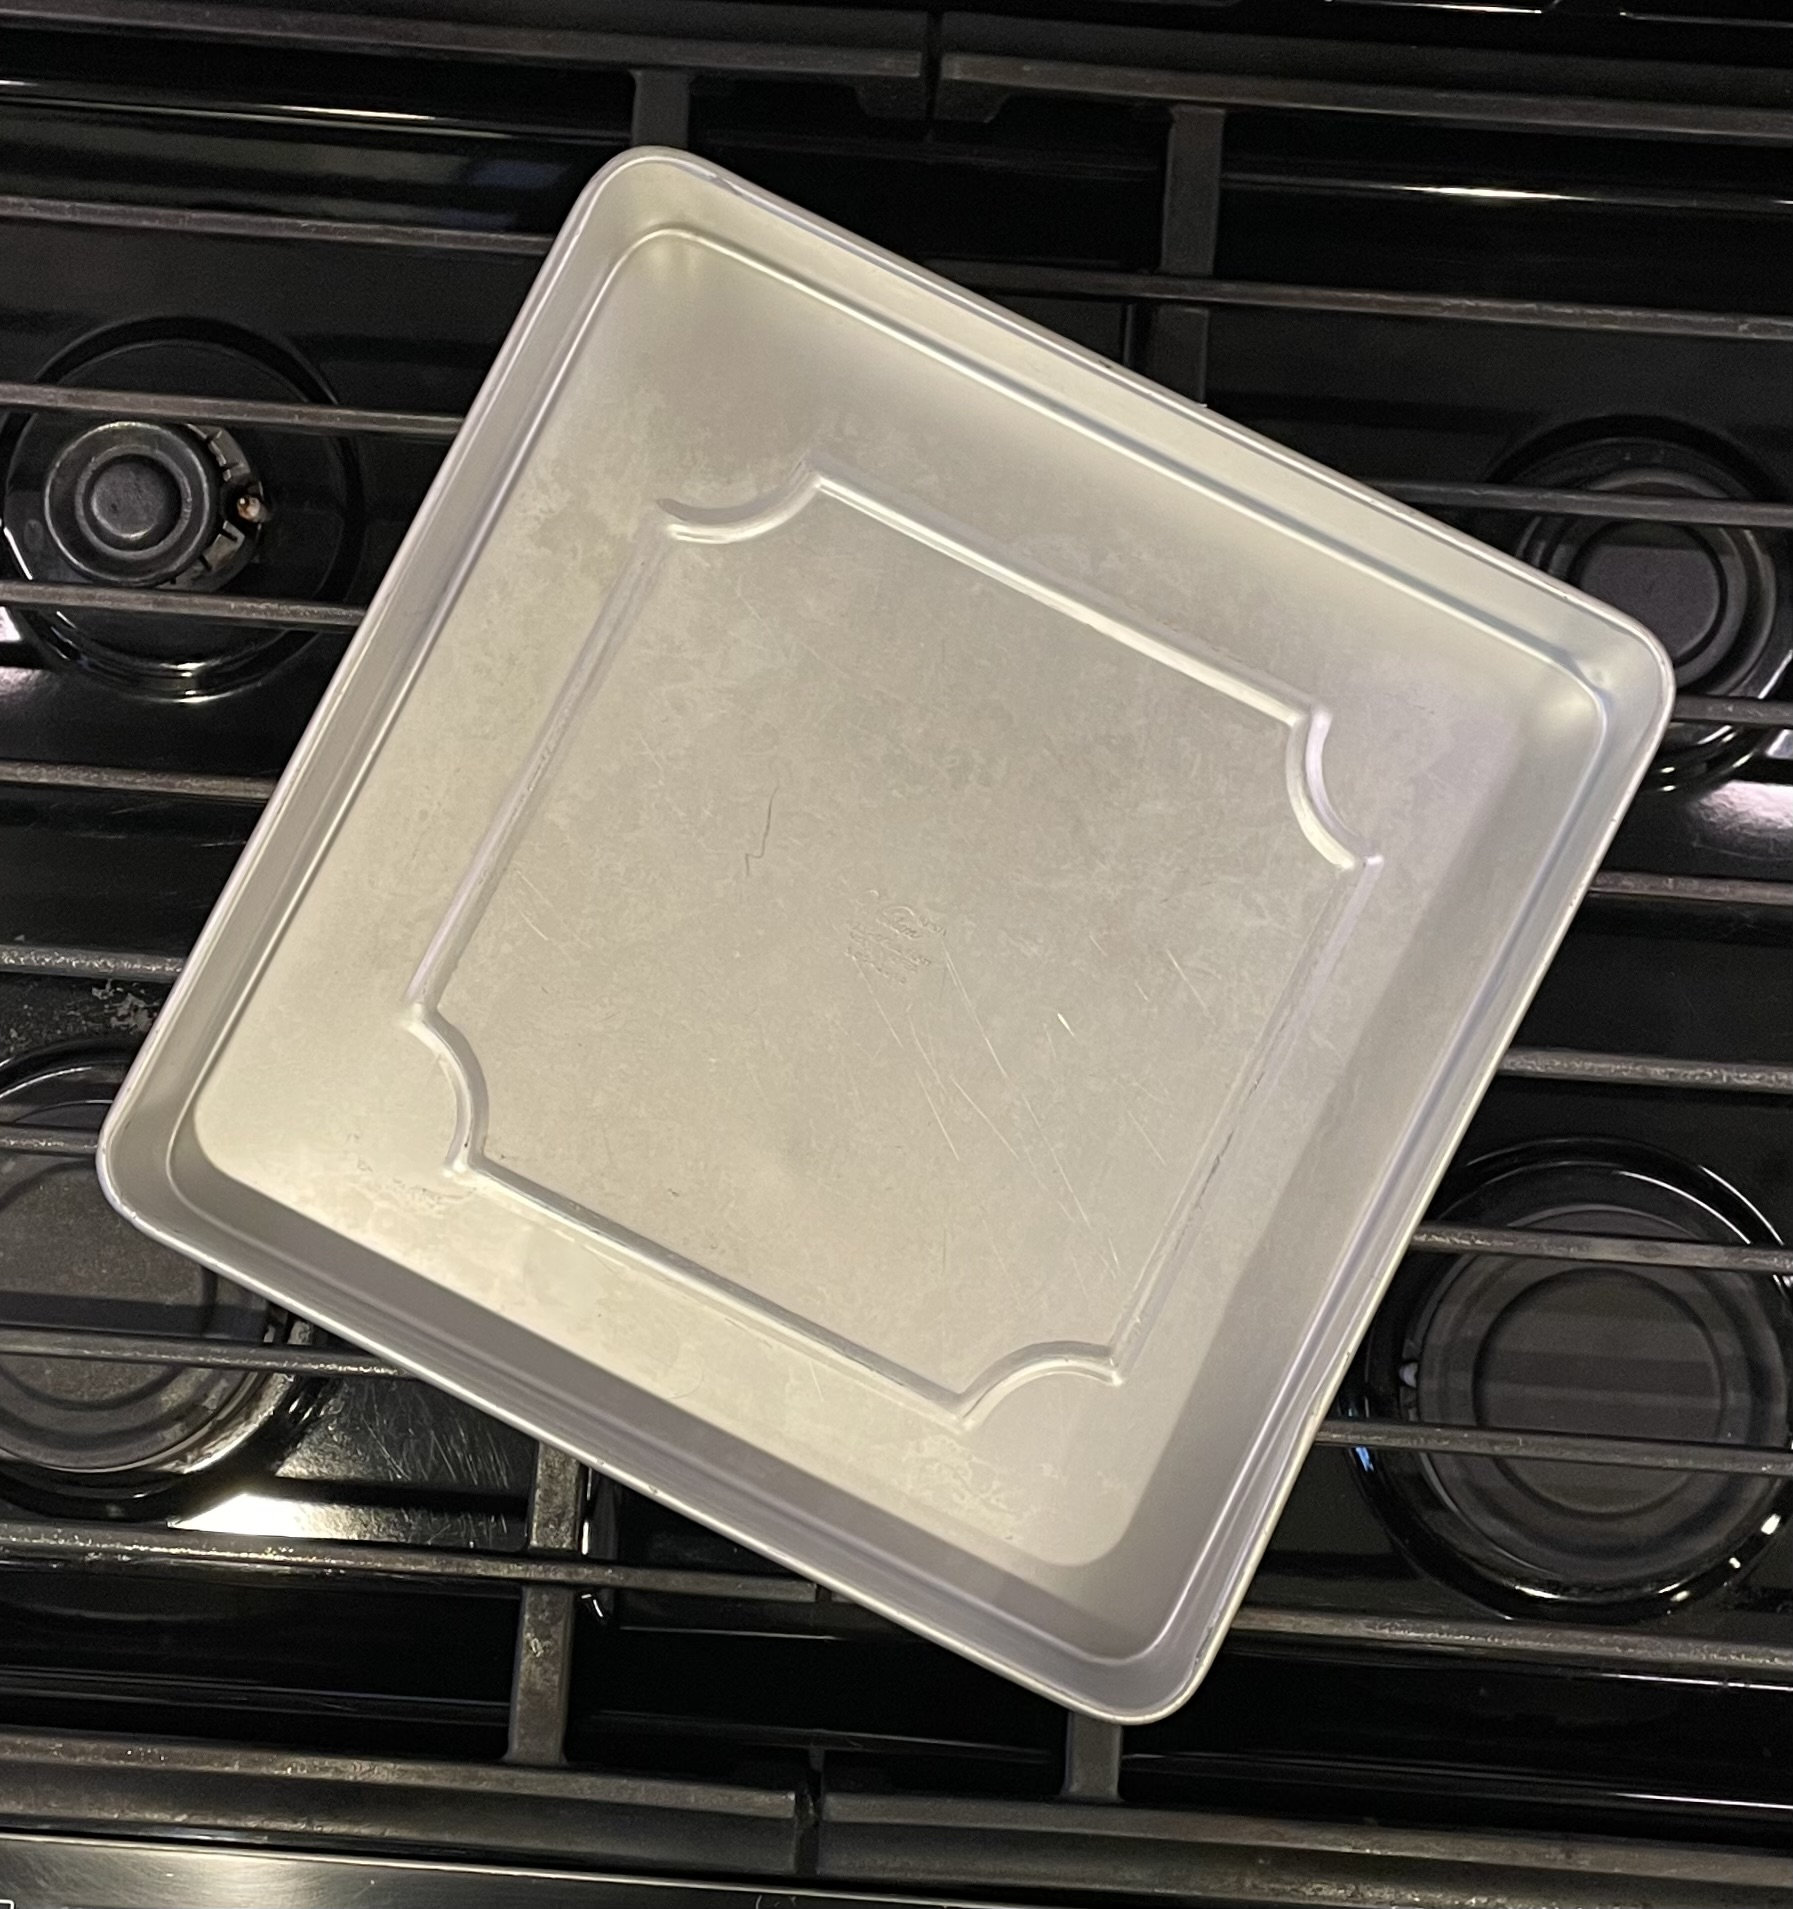 19cm Square Baking Pan – R & B Import